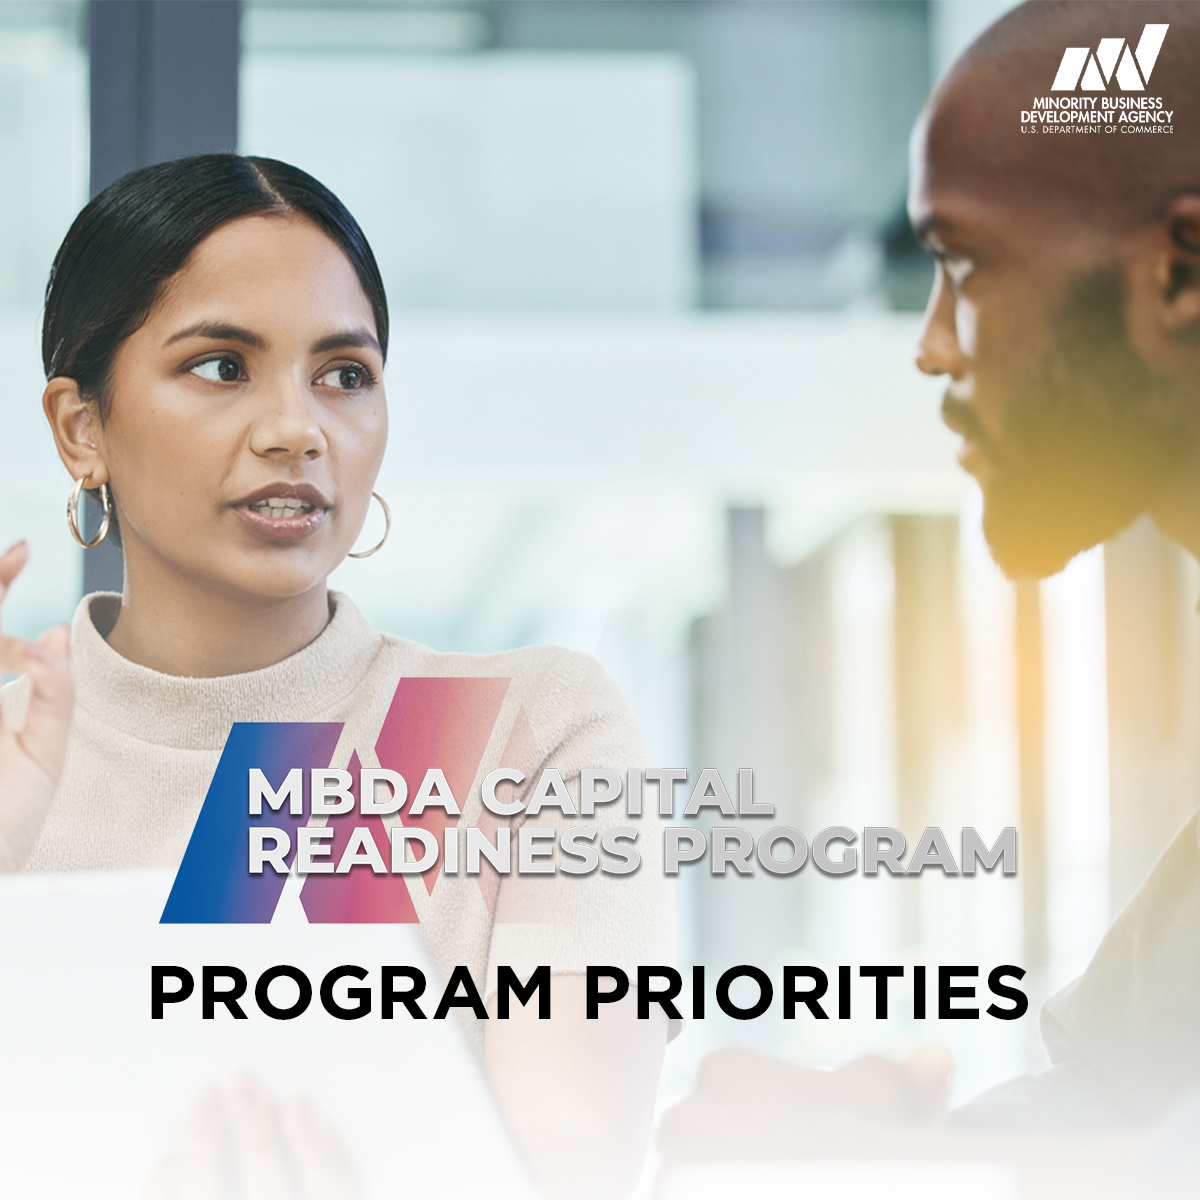 Program Priorities